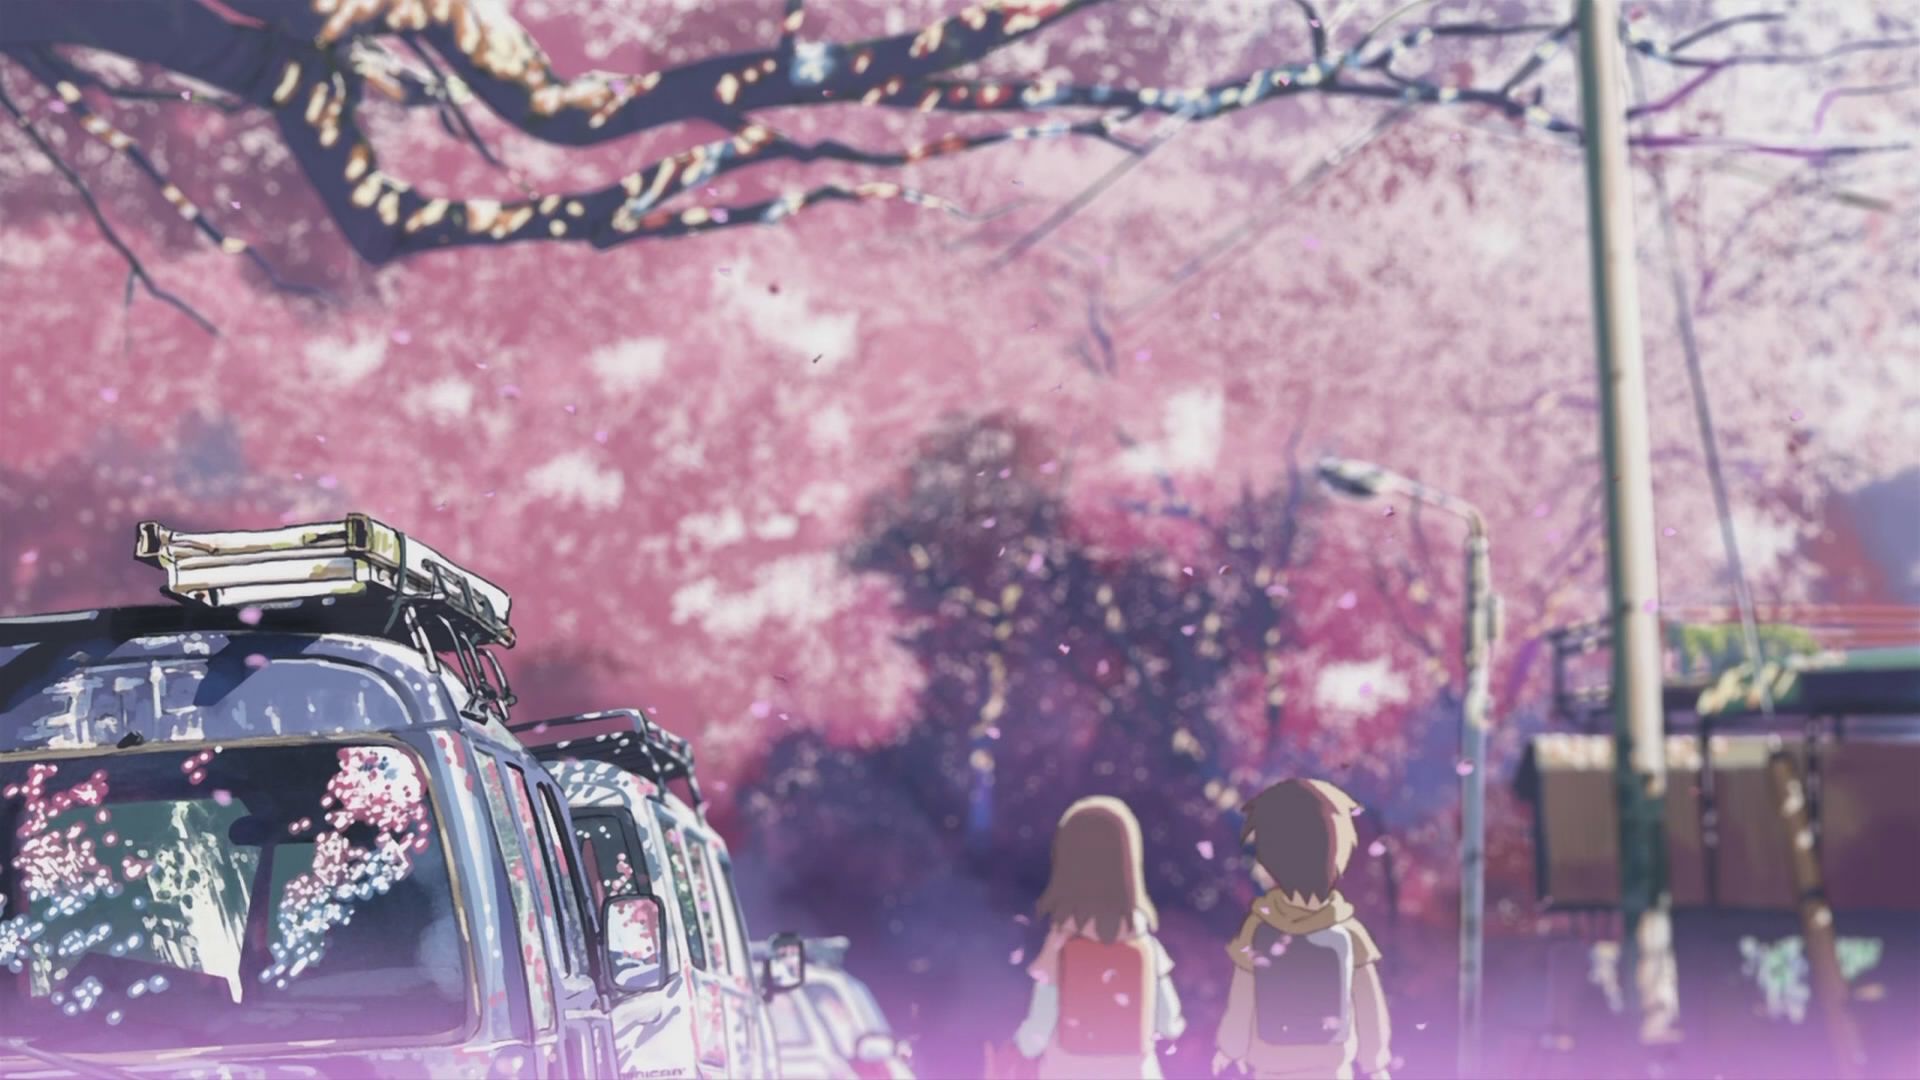 Onimai in the old anime aesthetic by Kishinillust  rOniichanOshimai